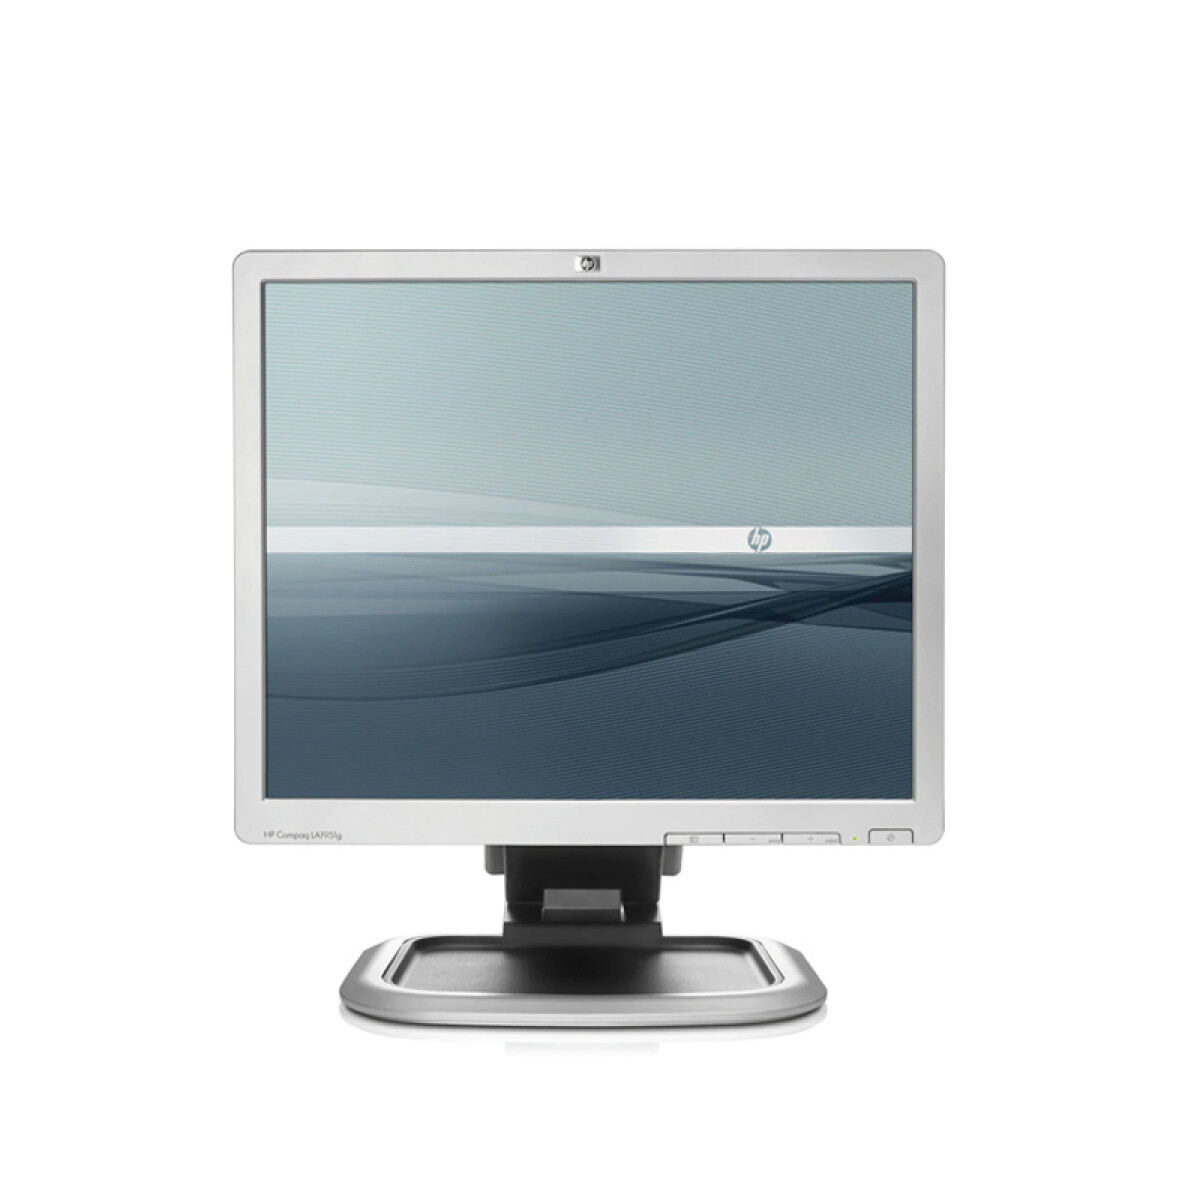 Monitor LCD 19" Recertificado Grado A+ - Unica 